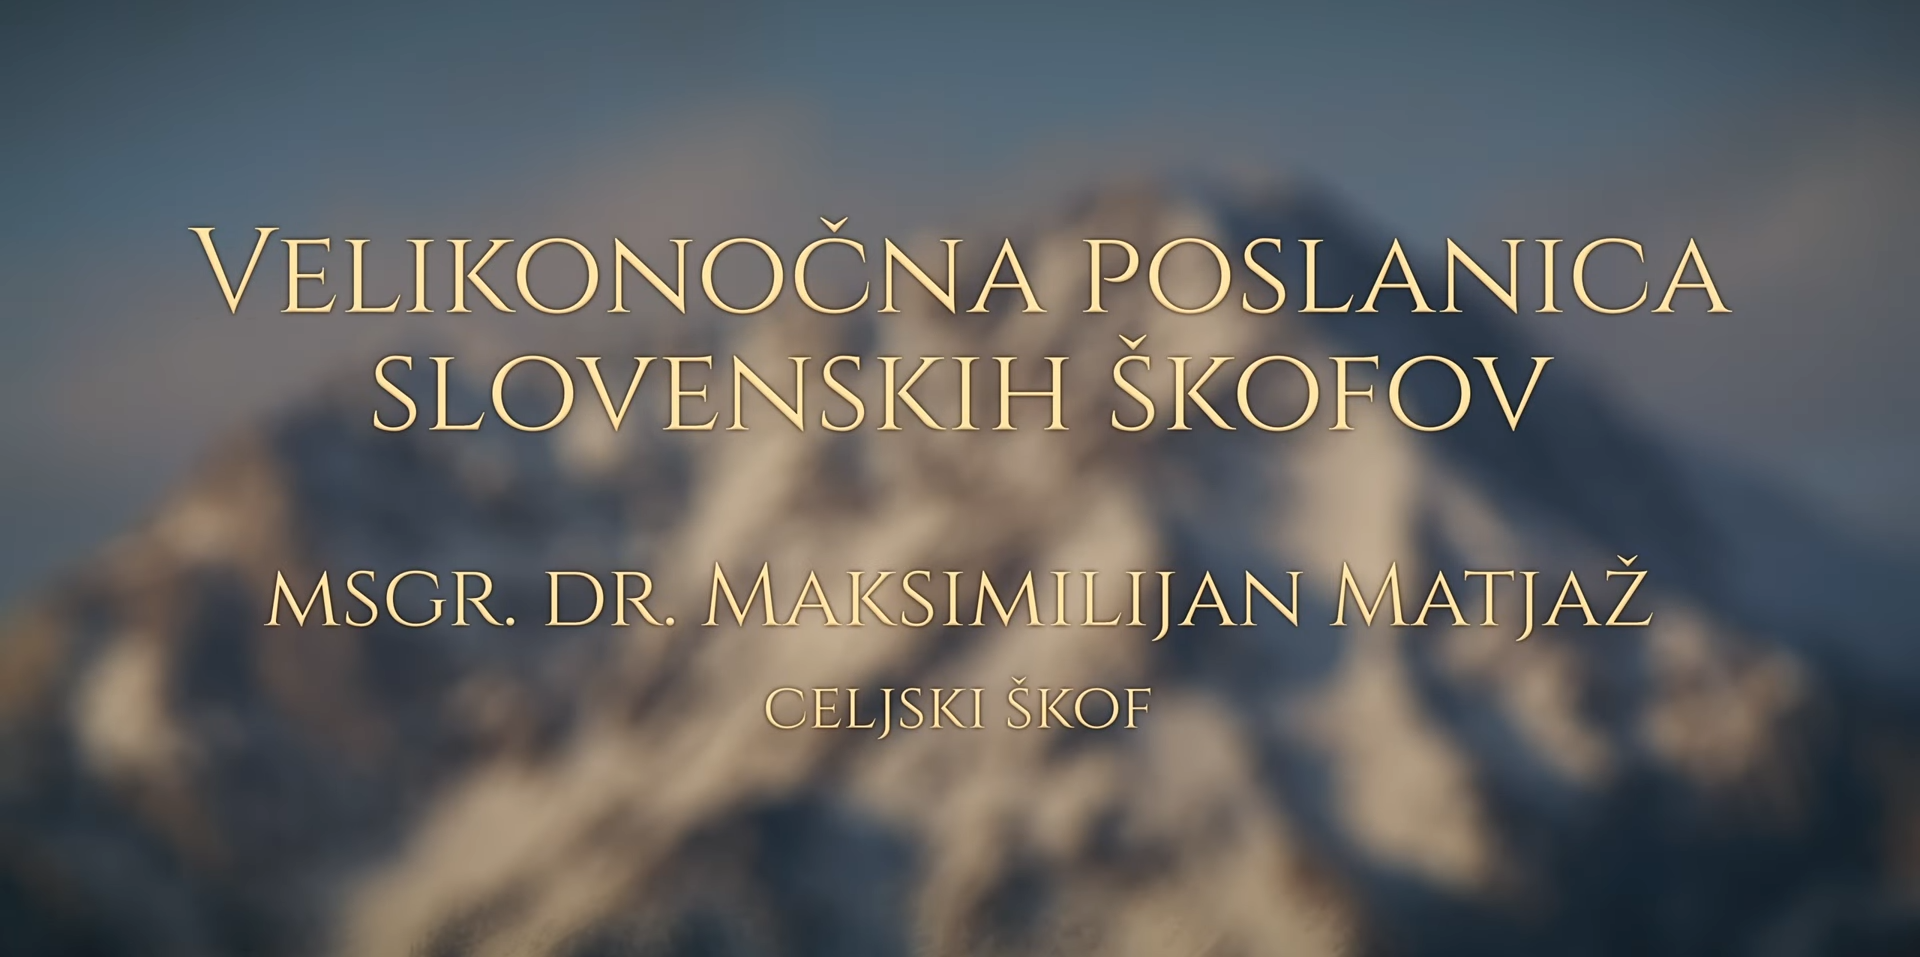 You are currently viewing Velikonočna poslanica slovenskih škofov